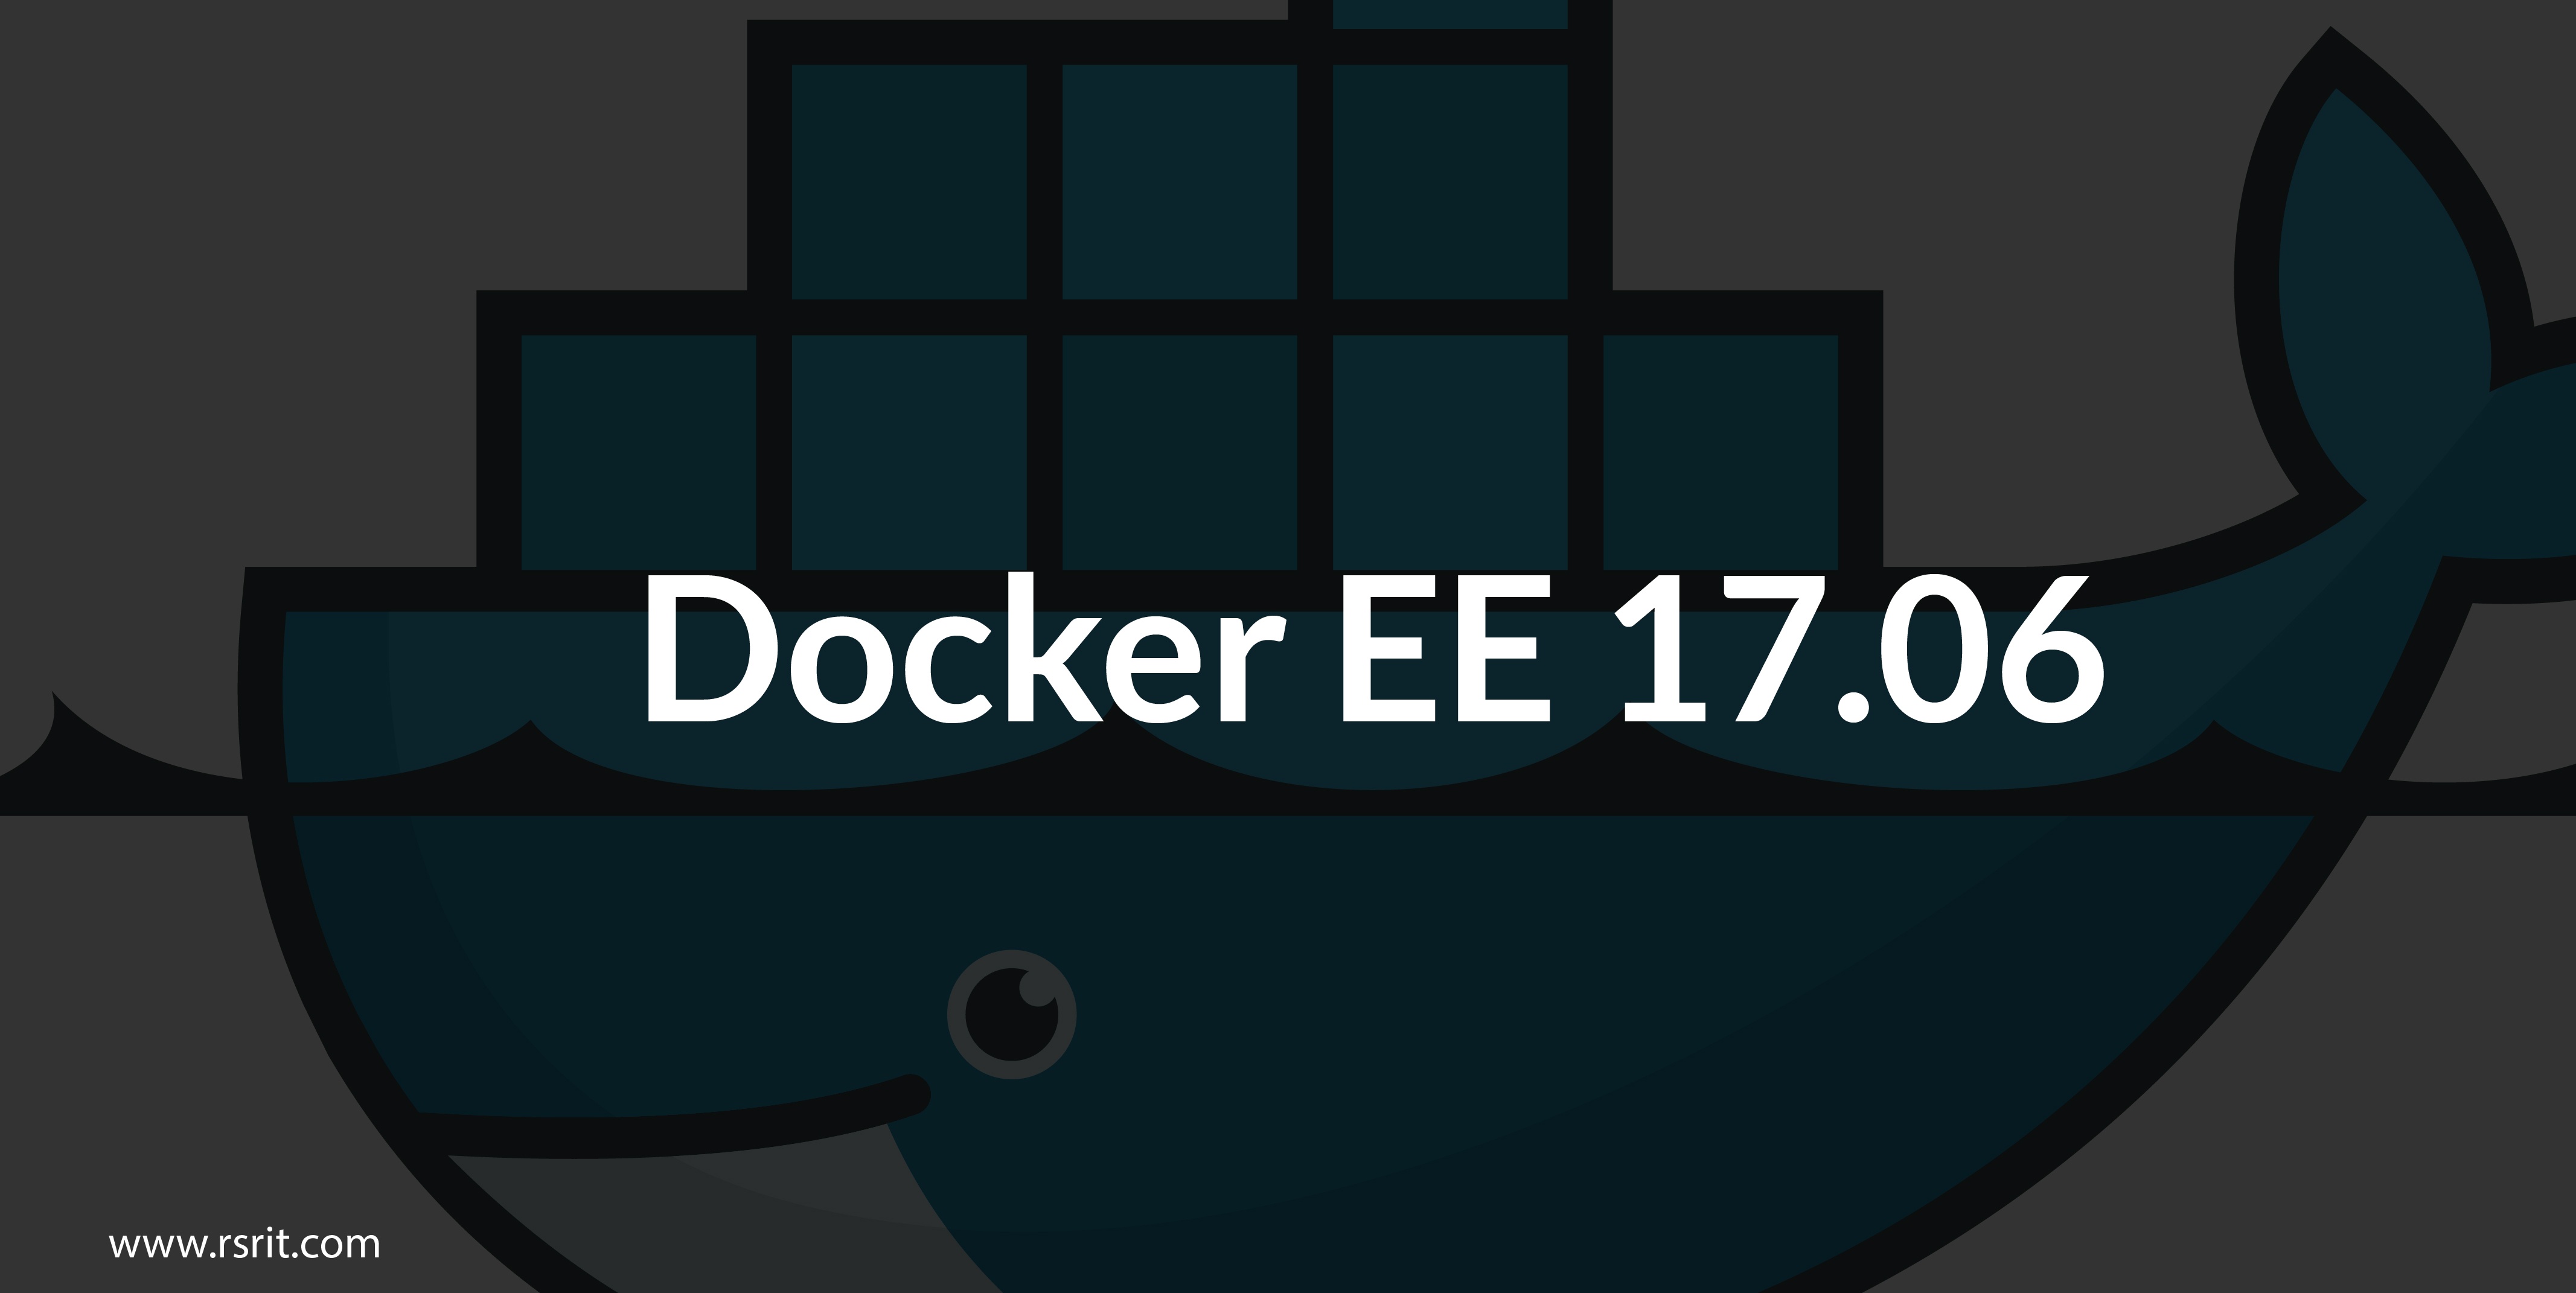 Docker EE 17.06 – Intense drive towards monetization?